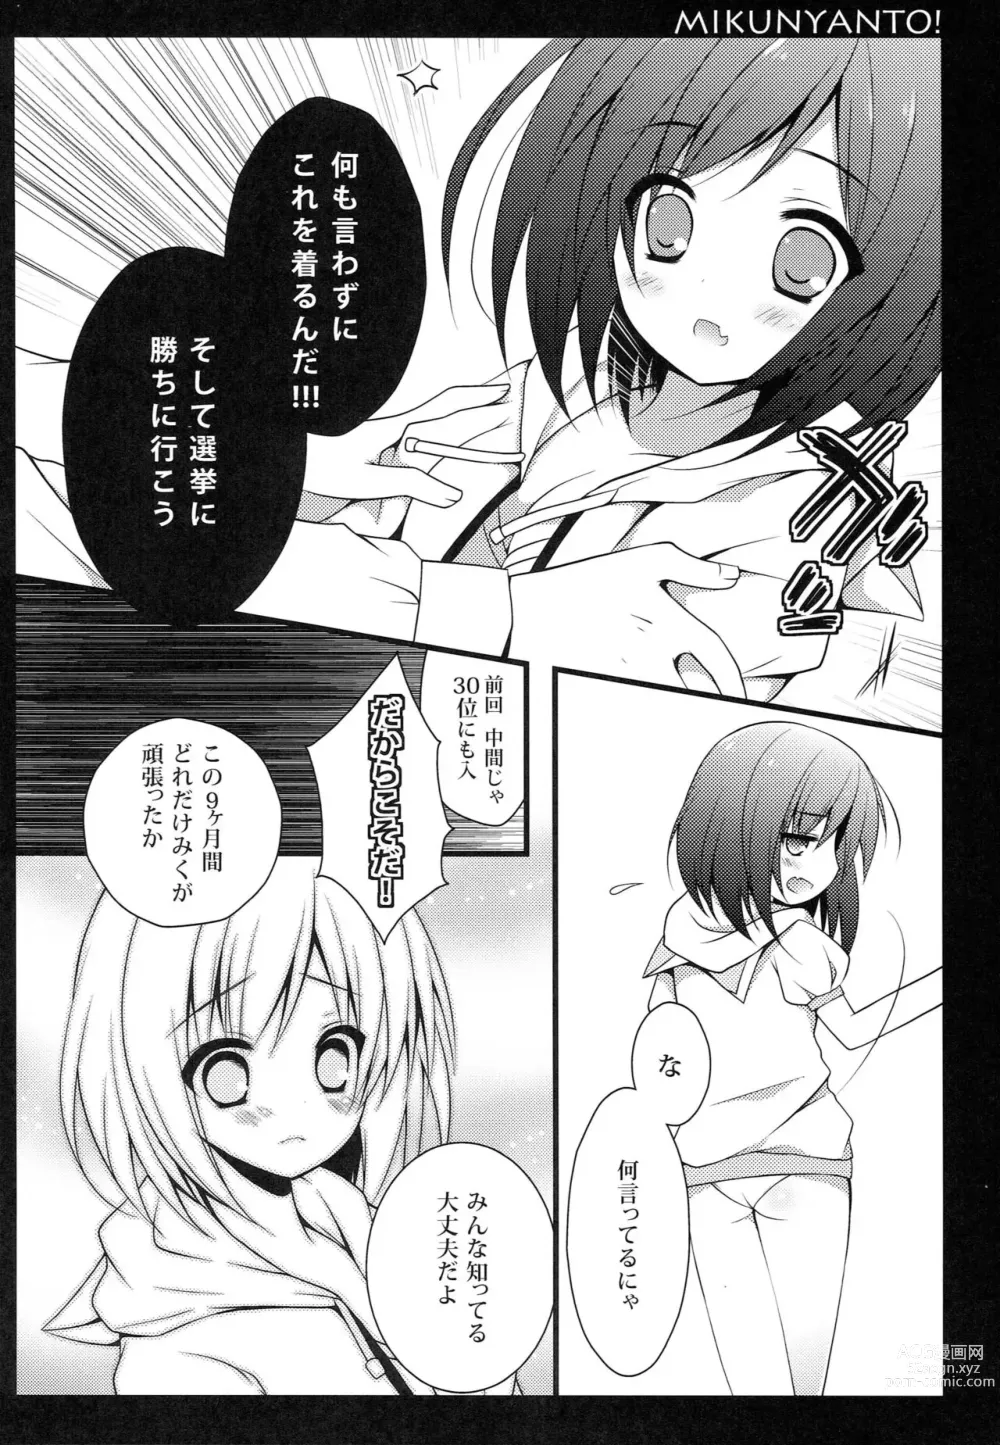 Page 7 of doujinshi Miku Nyan to!